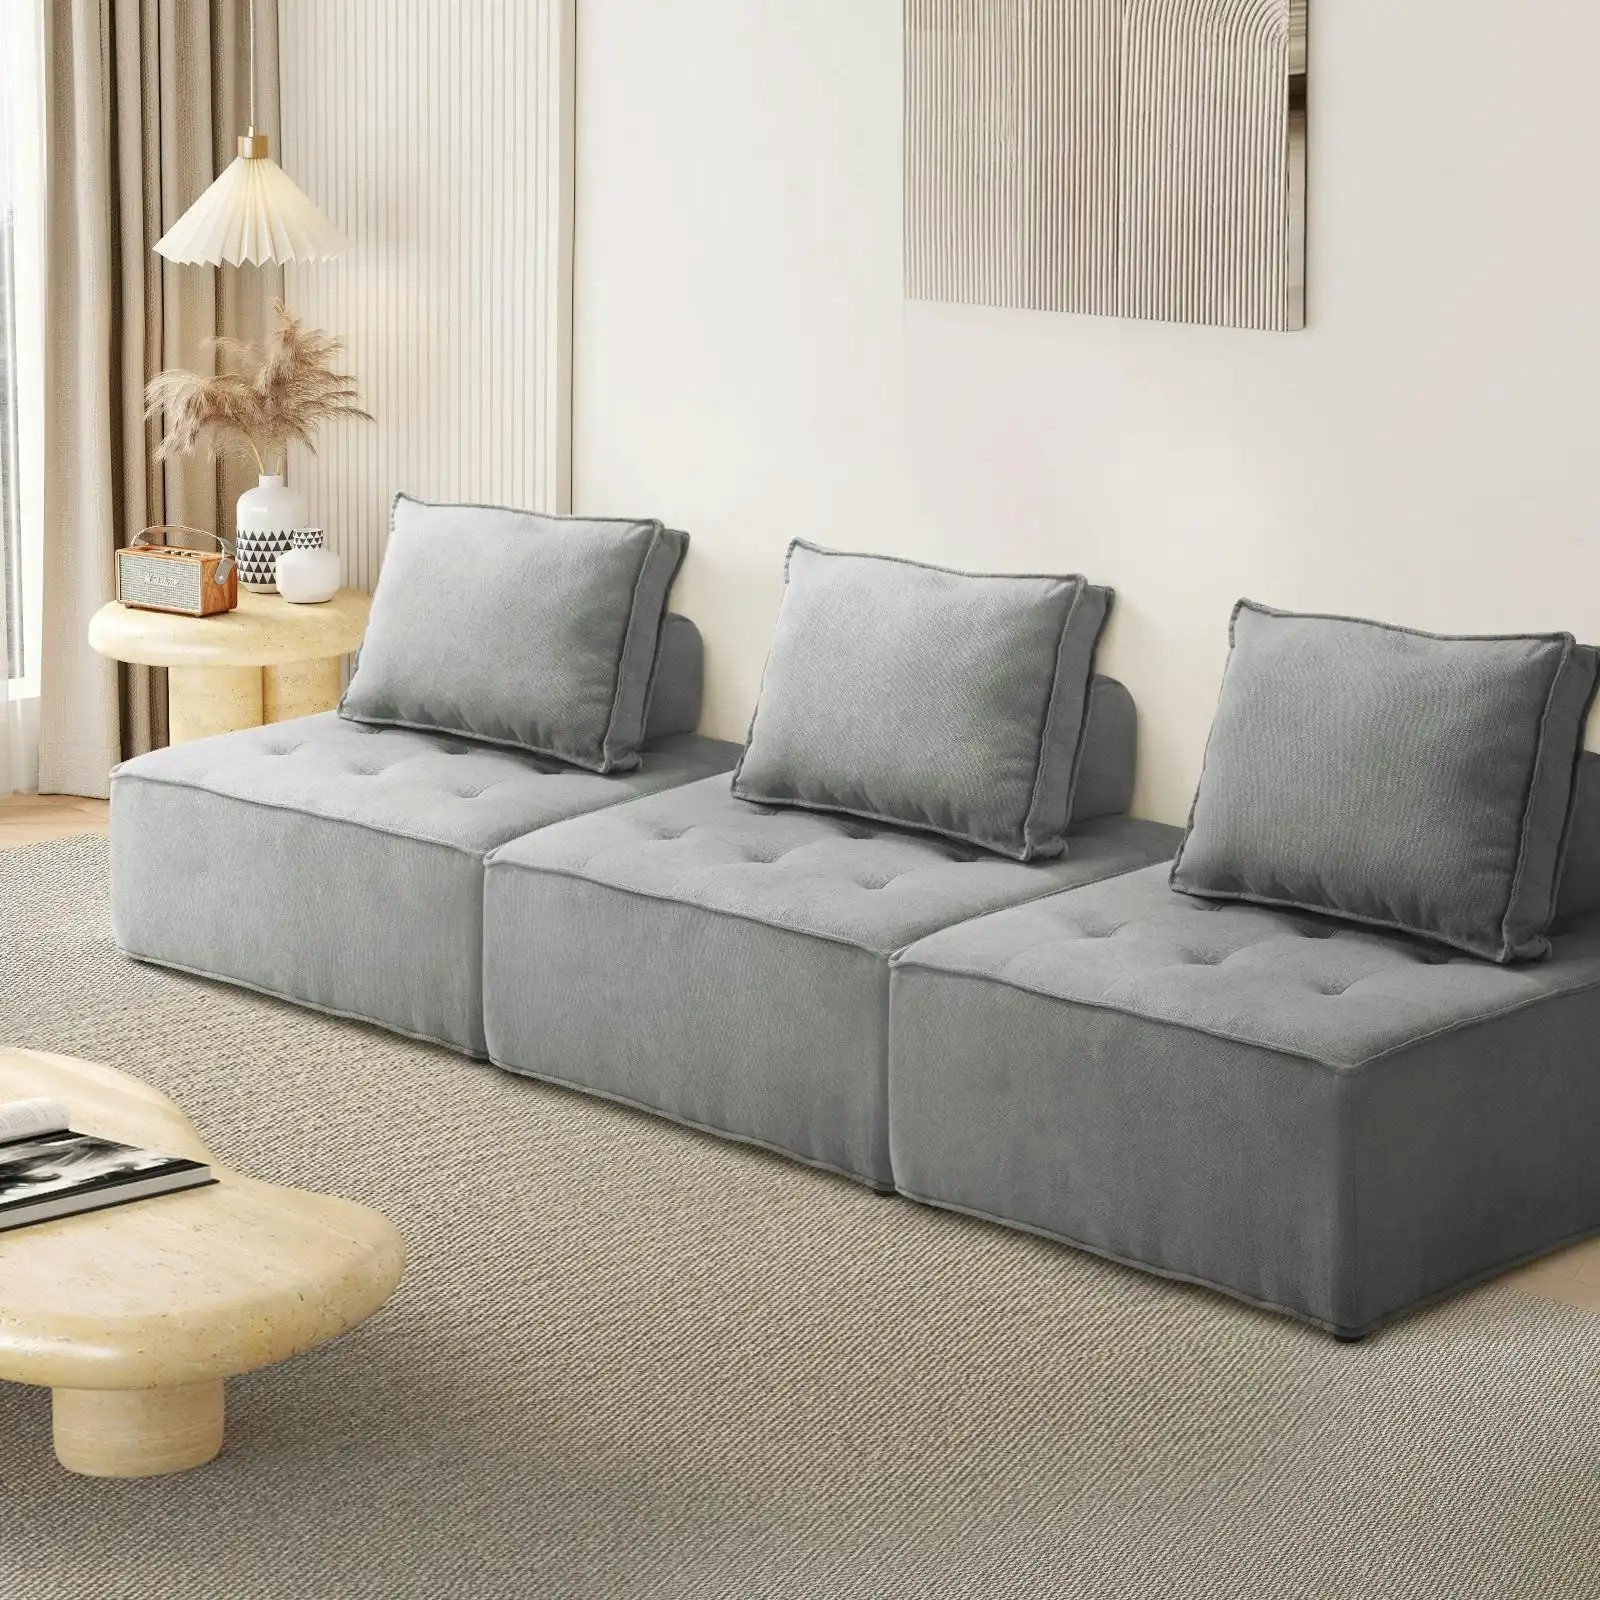 Oikiture 3PCS Modular Sofa Lounge Chair Armless Adjustable Back Linen Grey